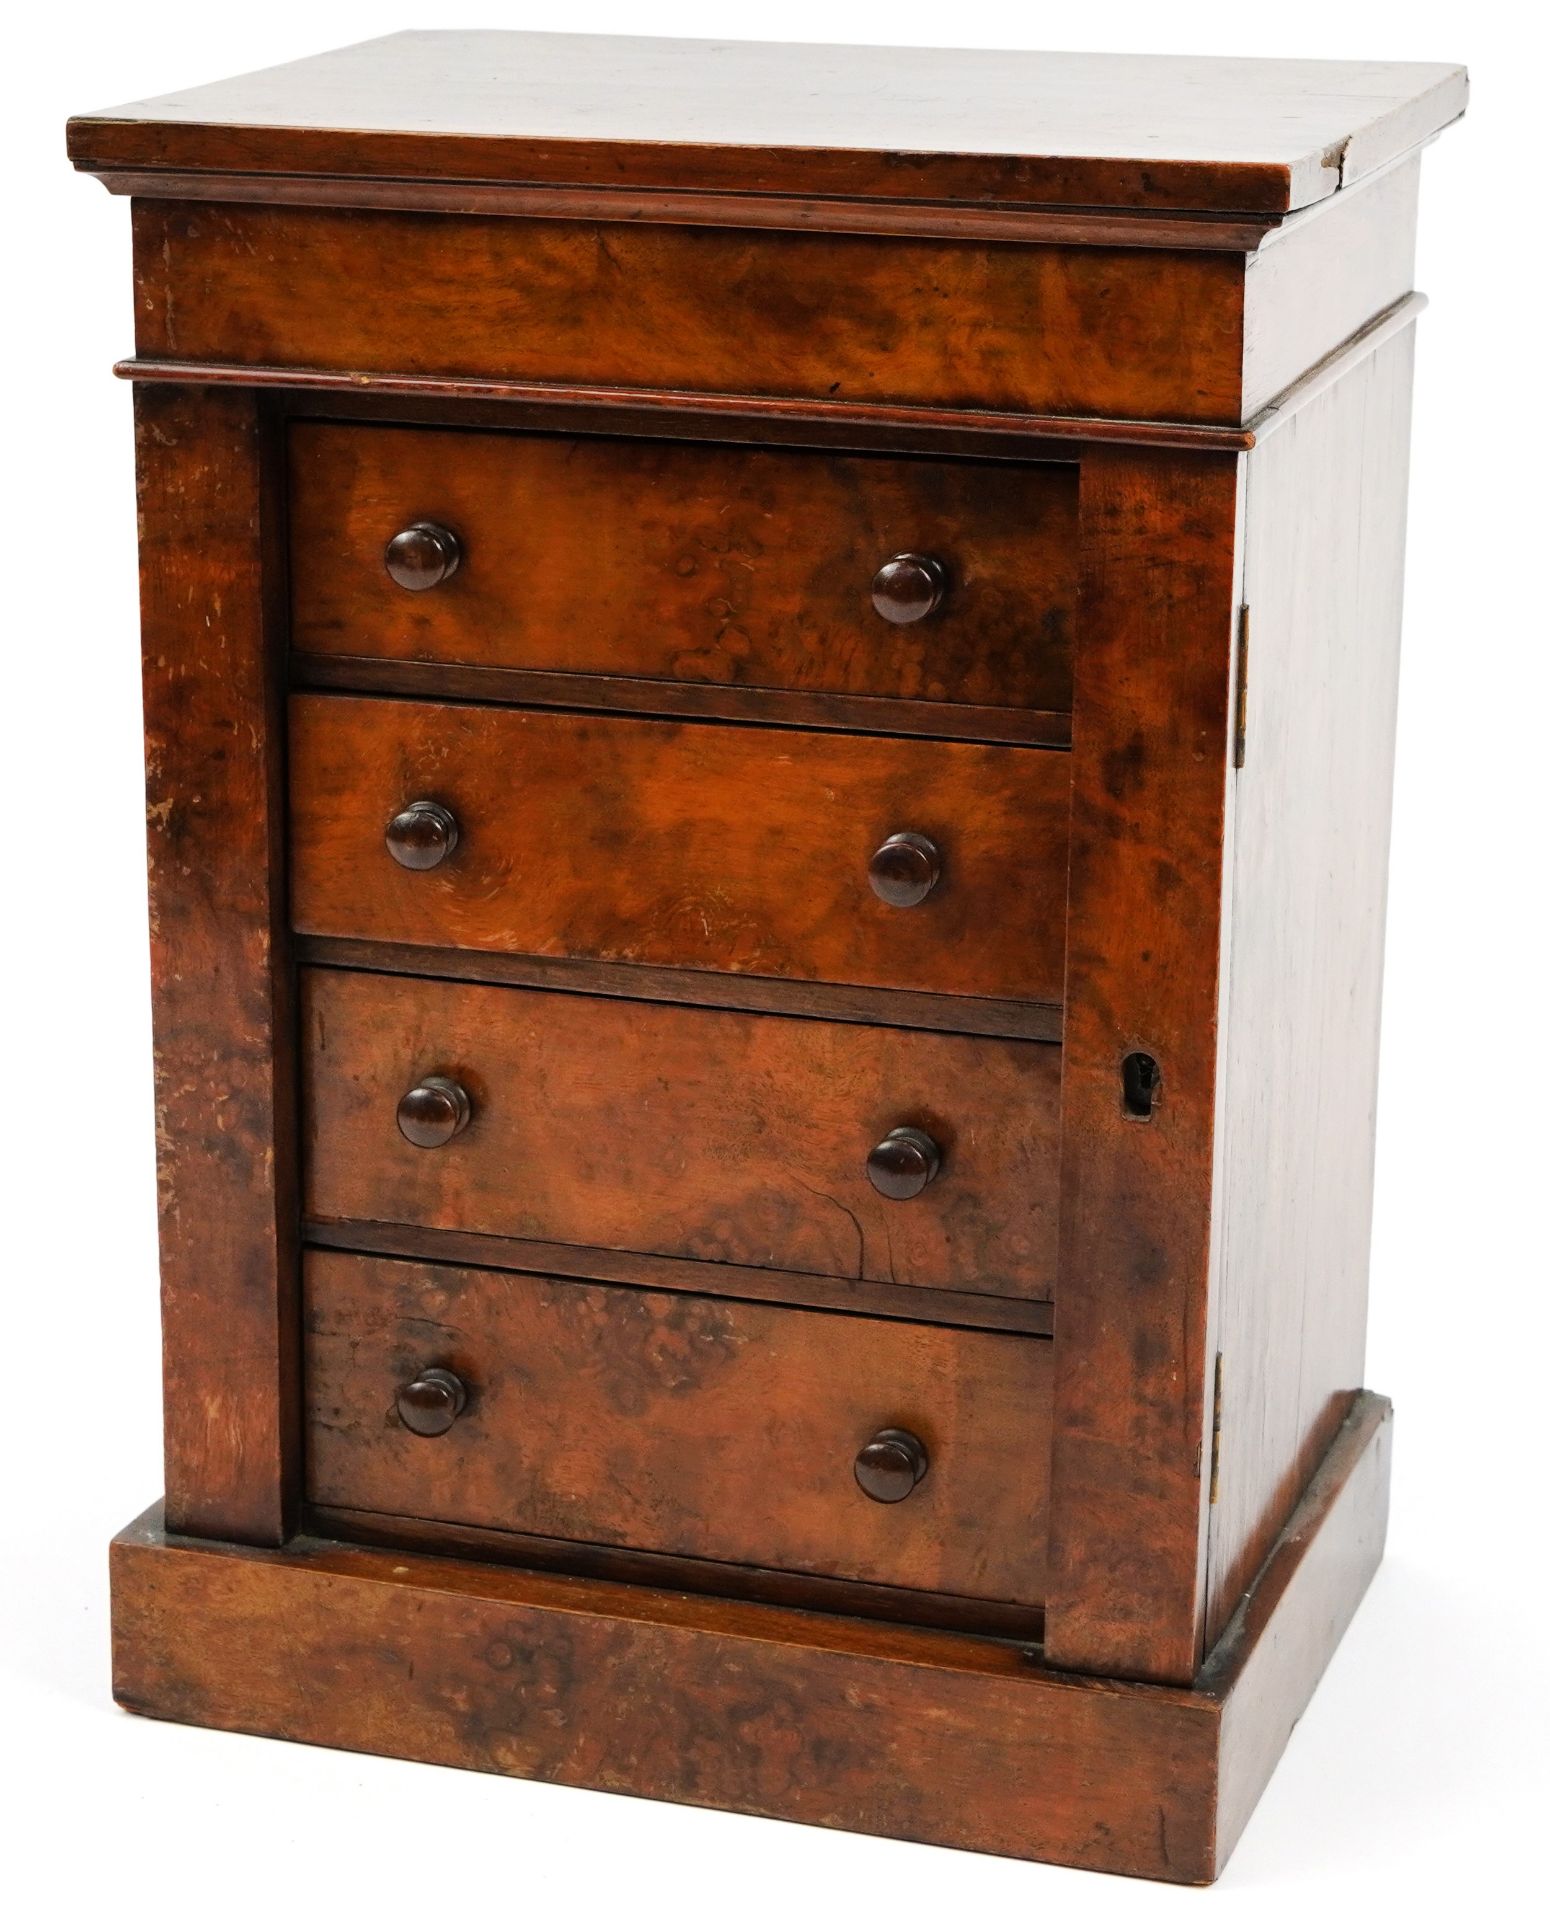 Victorian walnut four drawer specimen collector's chest, 42cm H x 30cm W x 22cm D